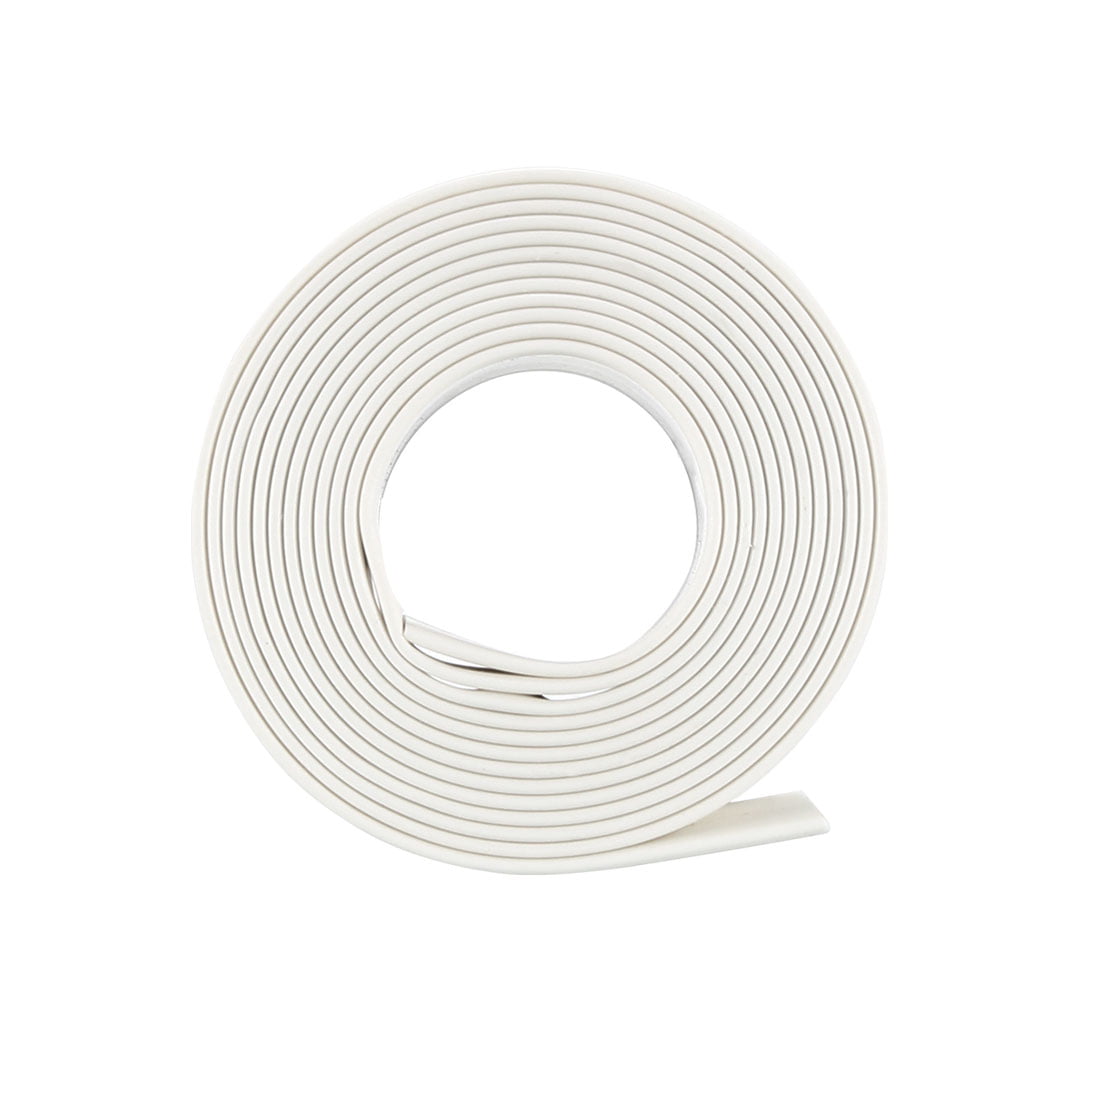 1M WHITE Heat shrink tubing,40mm diameter,electrical,car,wiring.2:1shrink ratio 